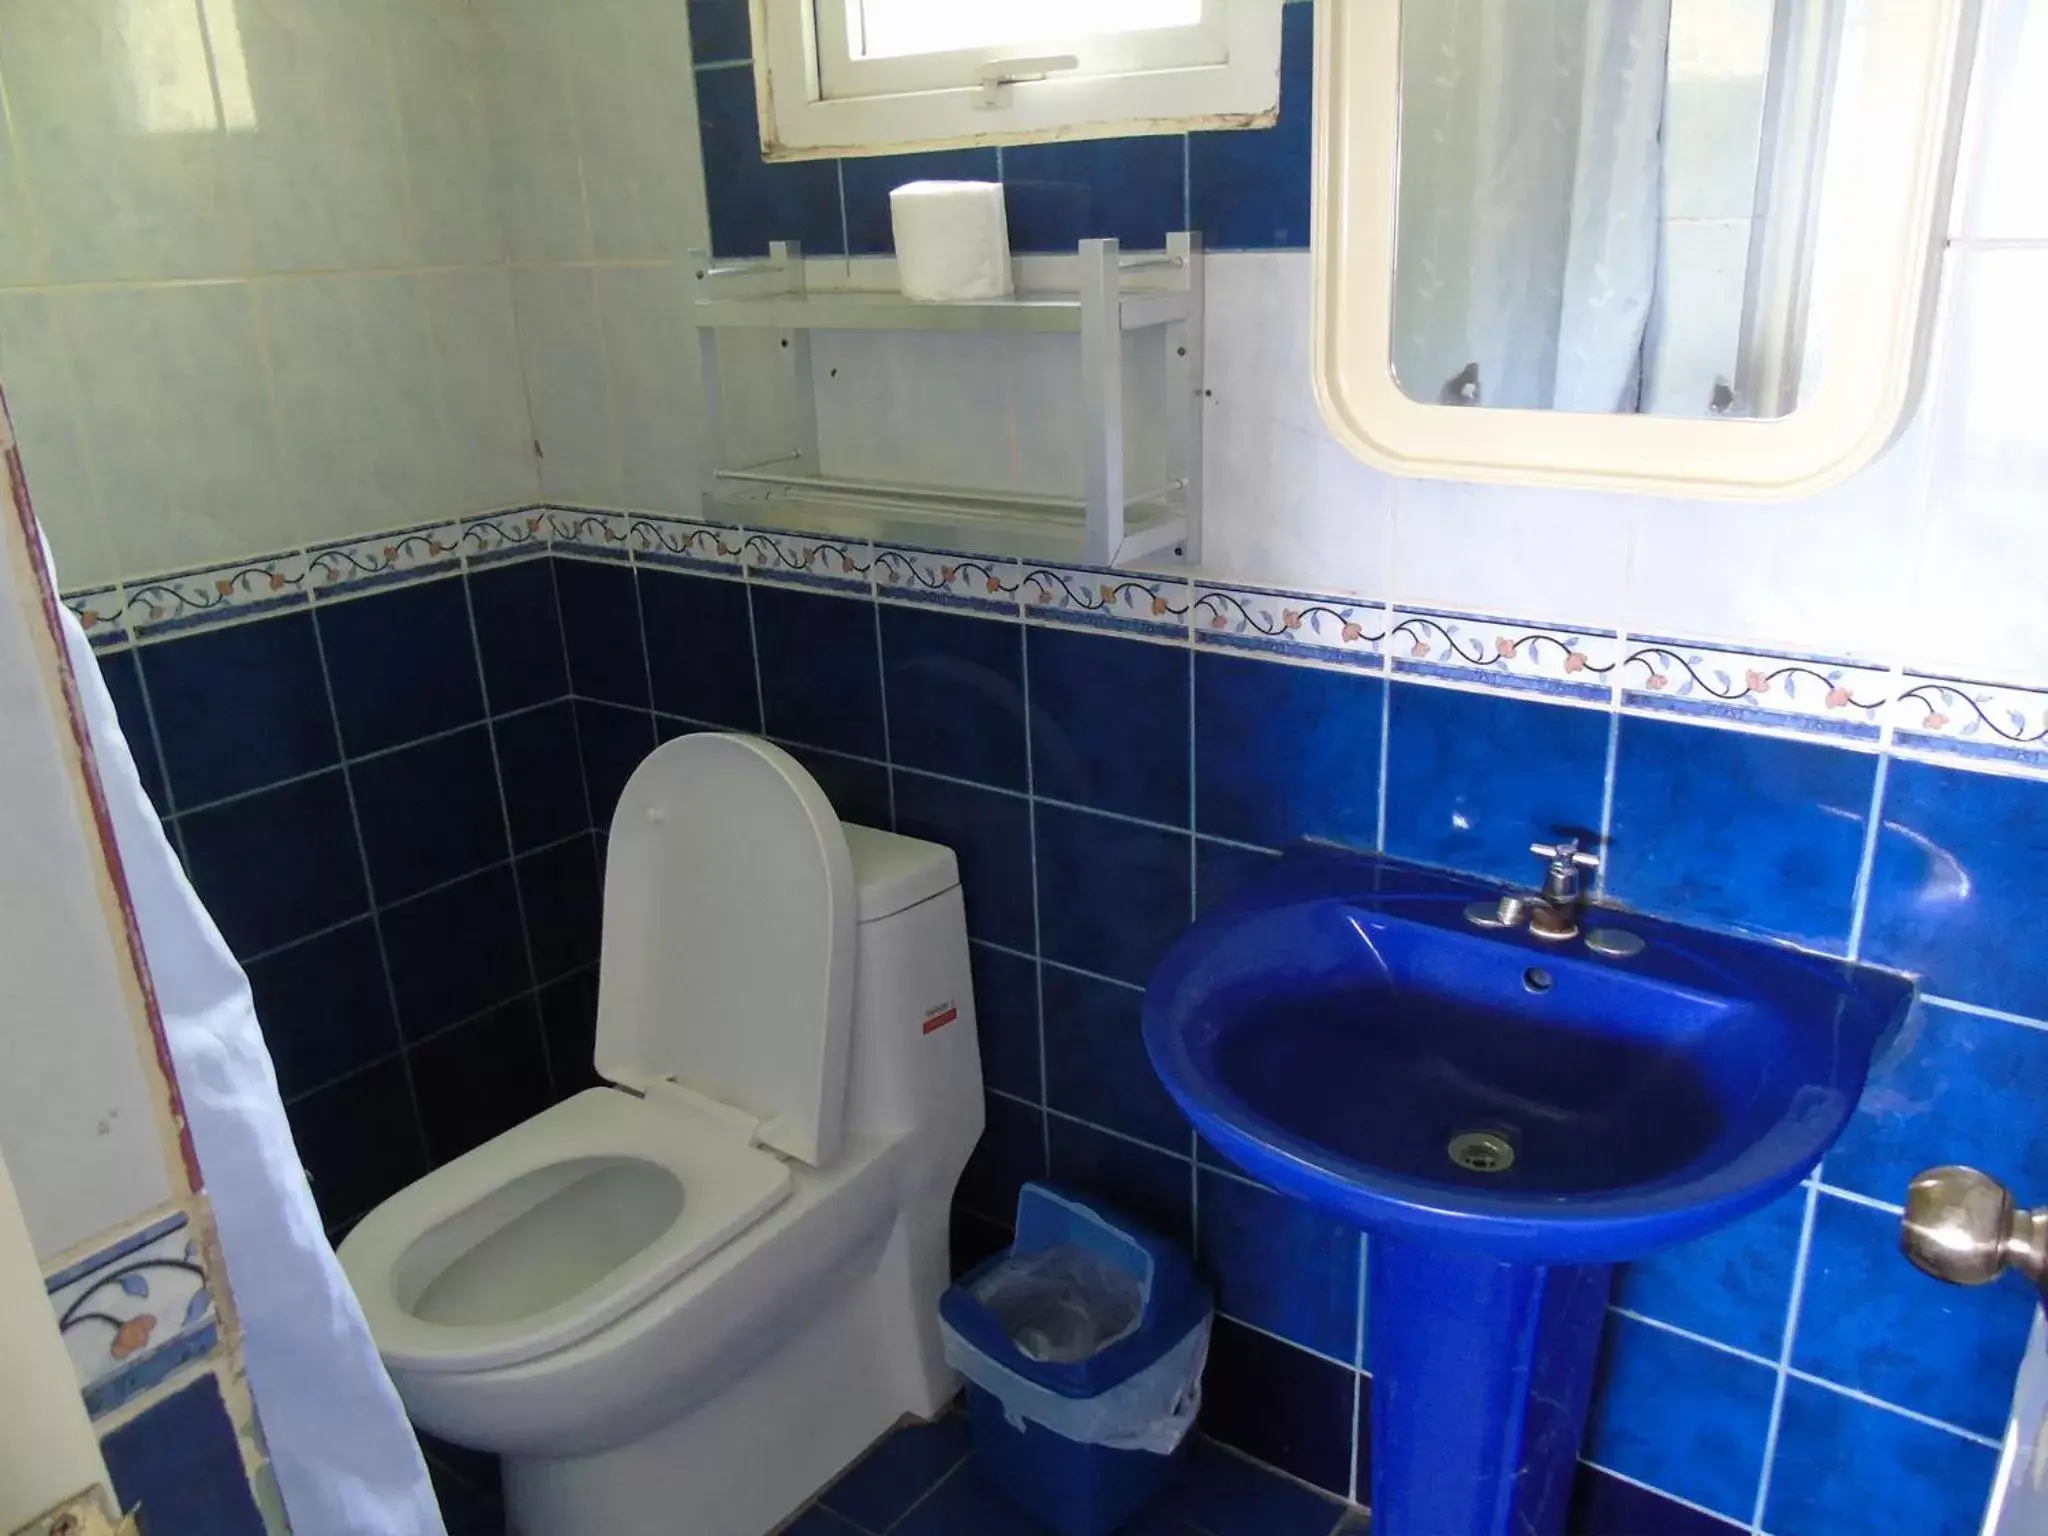 Bathroom in Blue Rock Resort